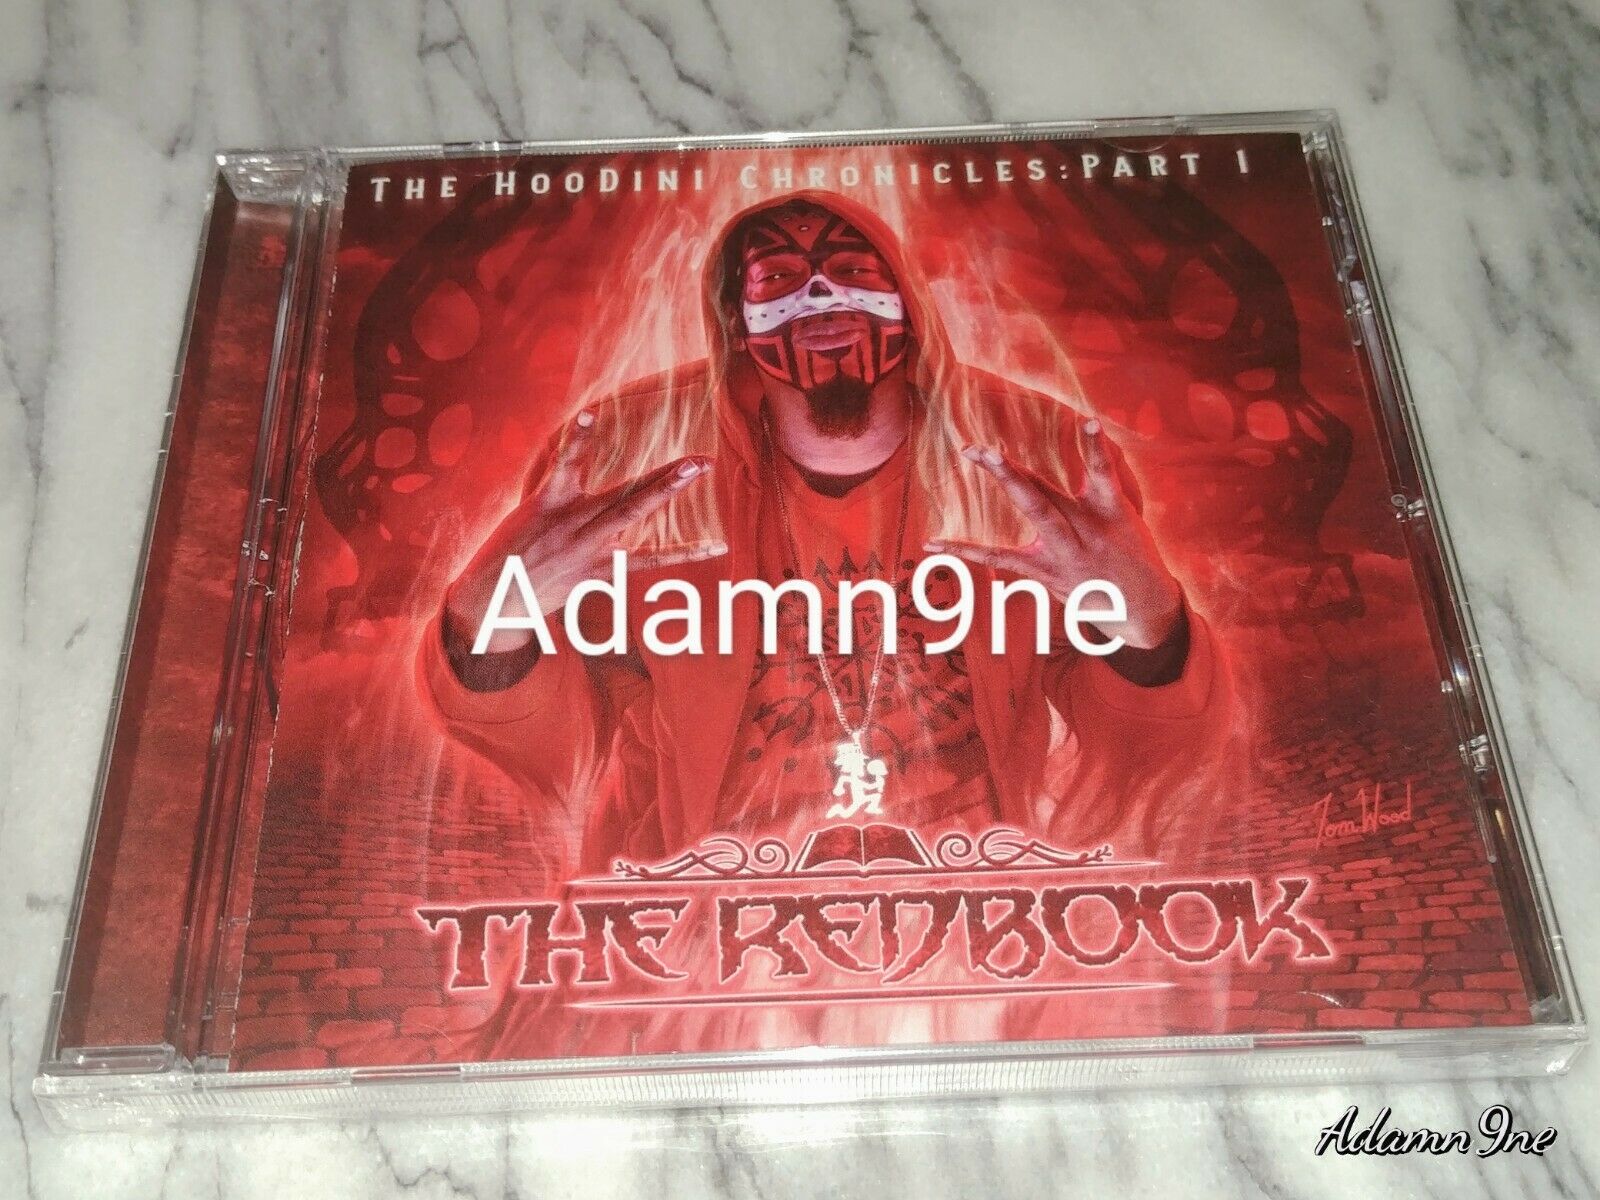 New Big Hoodoo Redbook The Hoodini Chronicles: Part 1 Cd Insane Clown Posse Icp